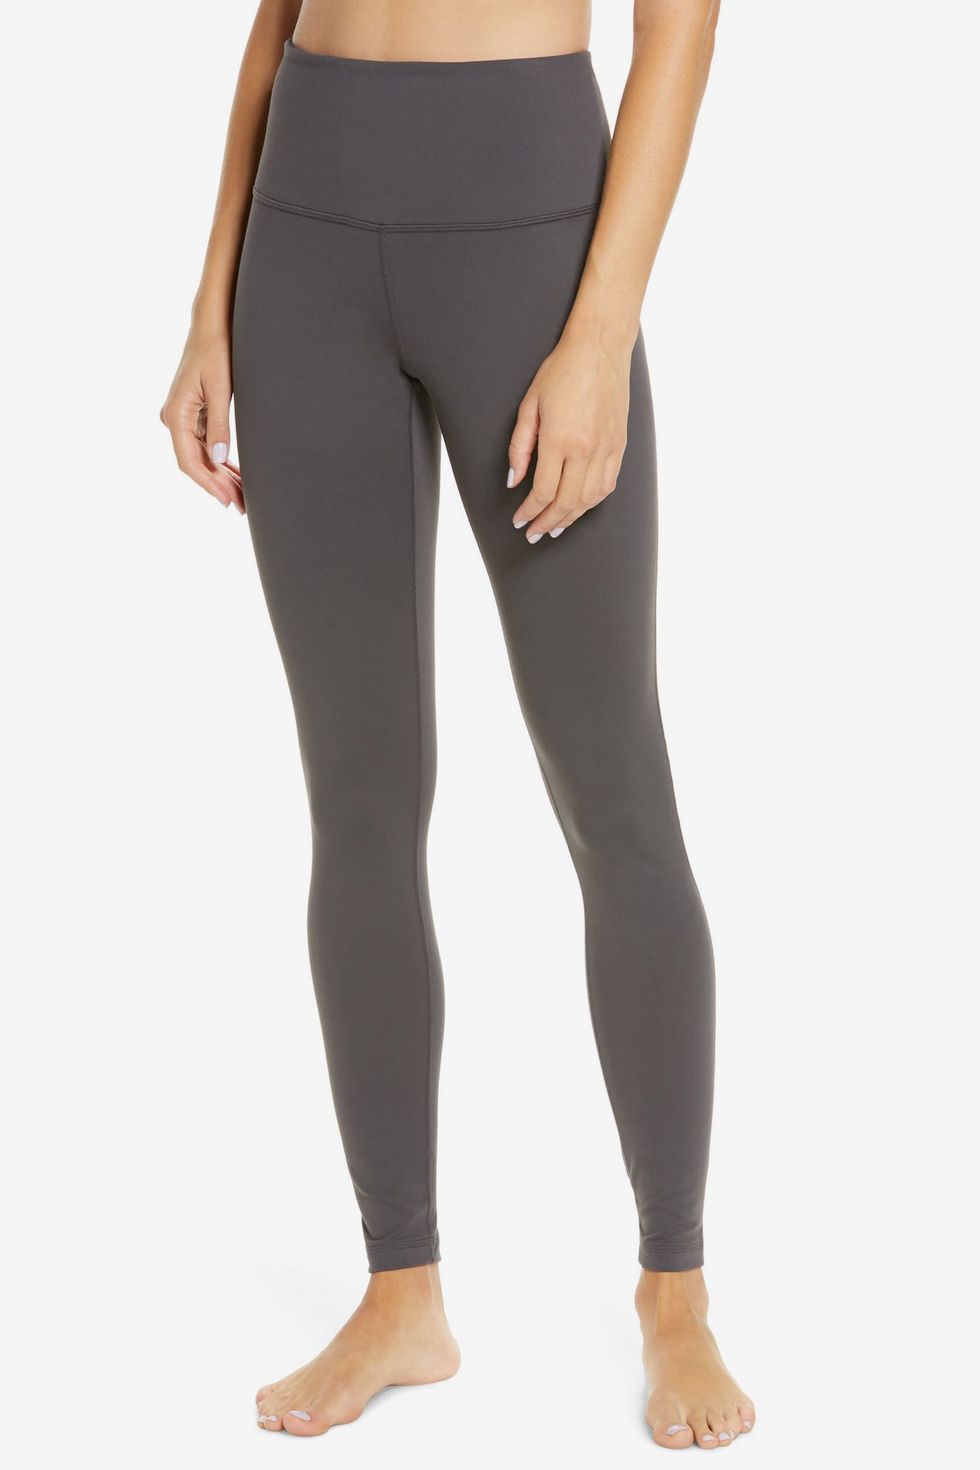 Zella Gray open leg yoga athletic pants cropped leggings size